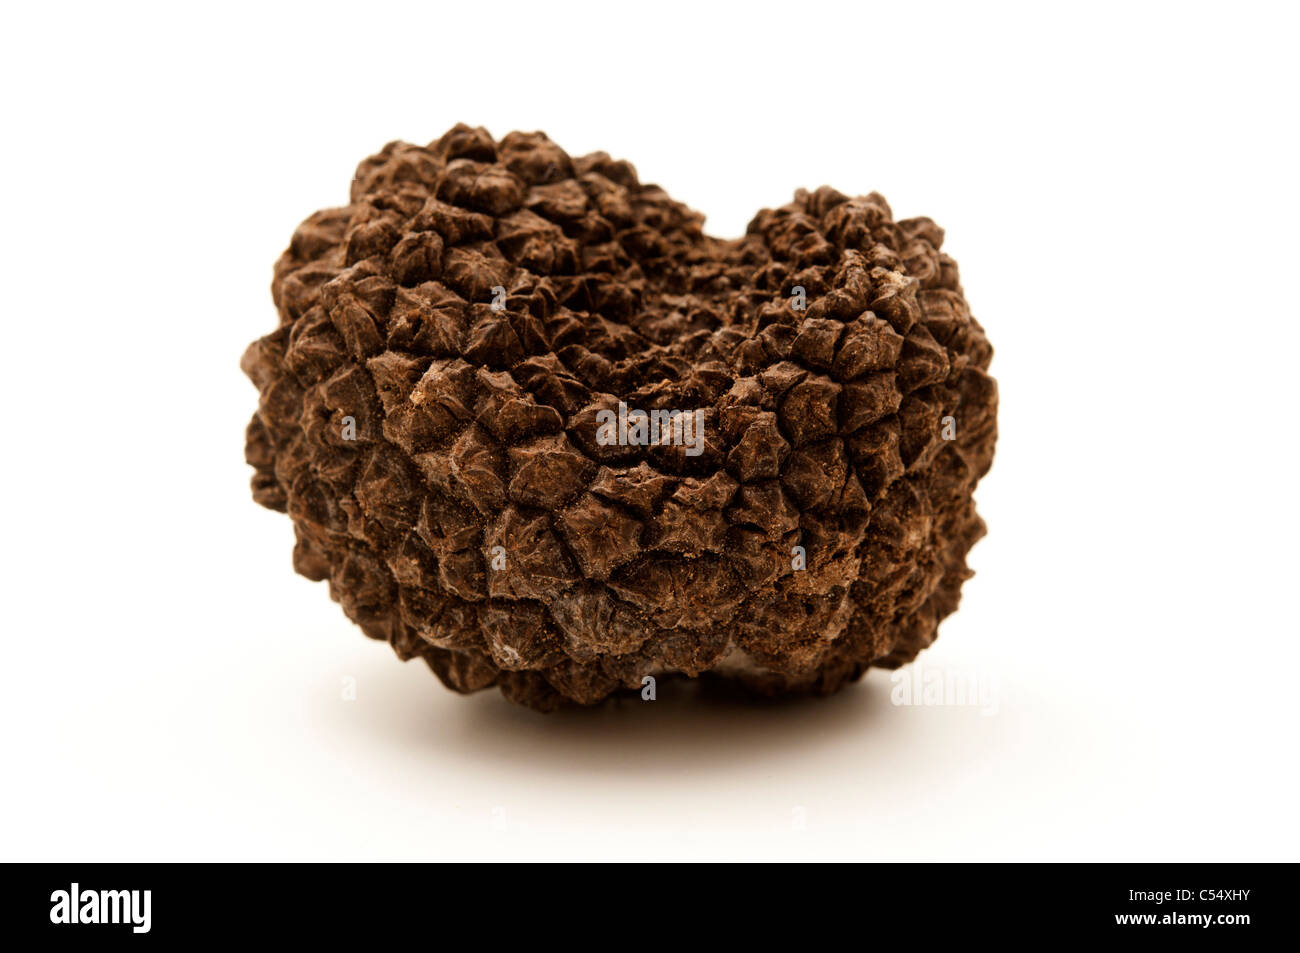 Summer truffle on a white background Stock Photo